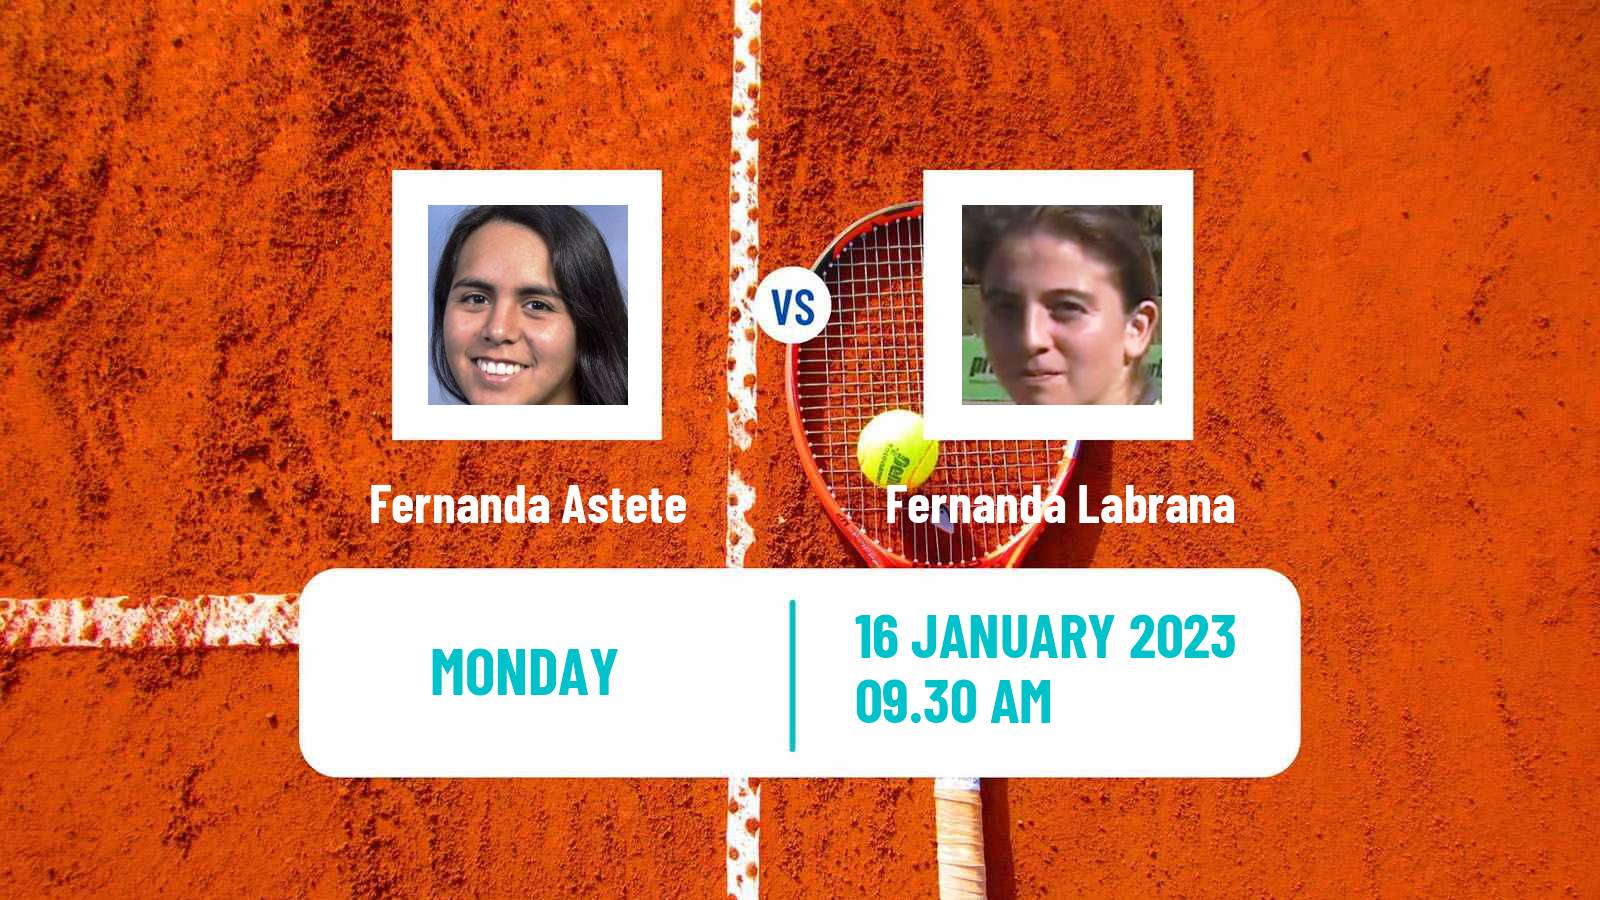 Tennis ITF Tournaments Fernanda Astete - Fernanda Labrana